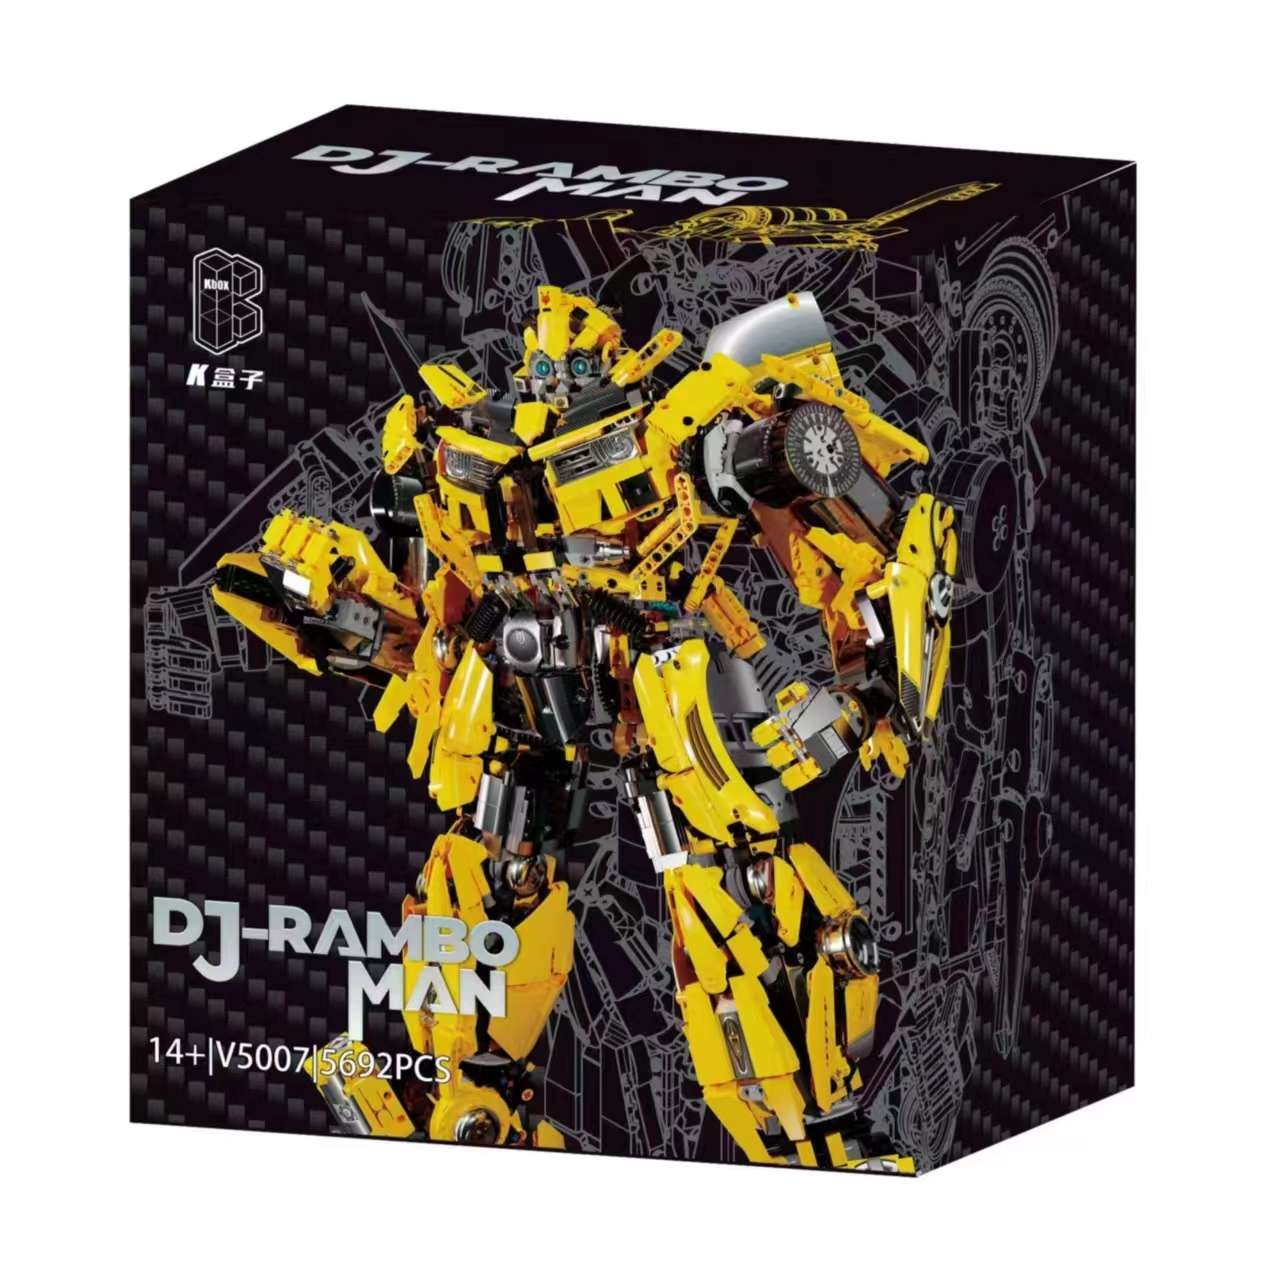 K盒子V5007积木变形金刚系列大黄蜂汽车机器人钢铁侠机甲拼装玩具详情图2